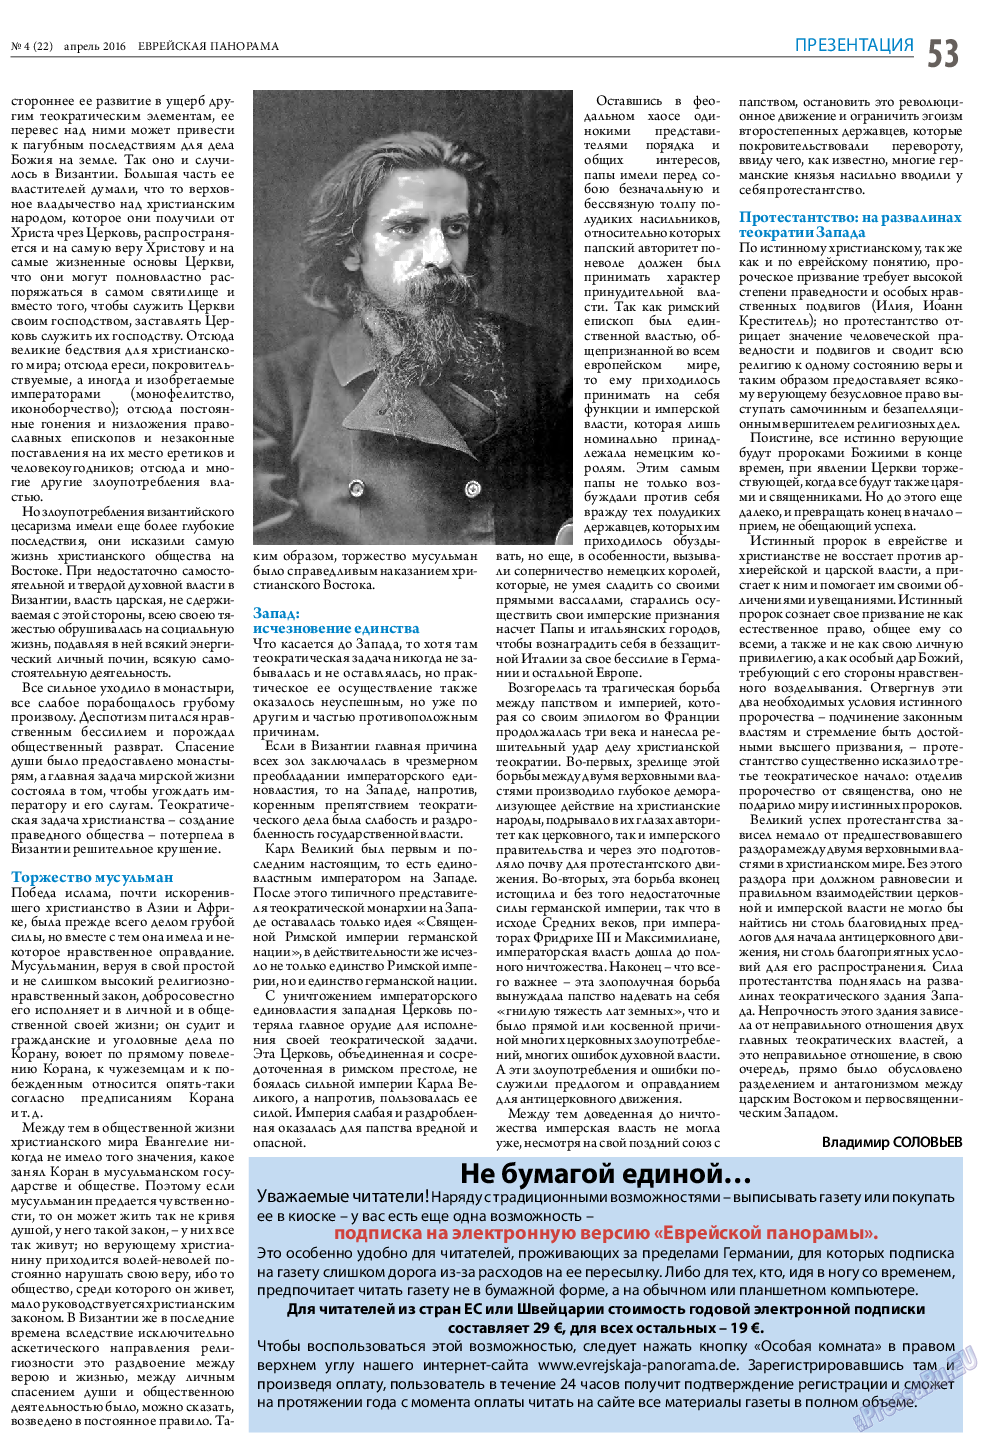 Еврейская панорама, газета. 2016 №4 стр.53